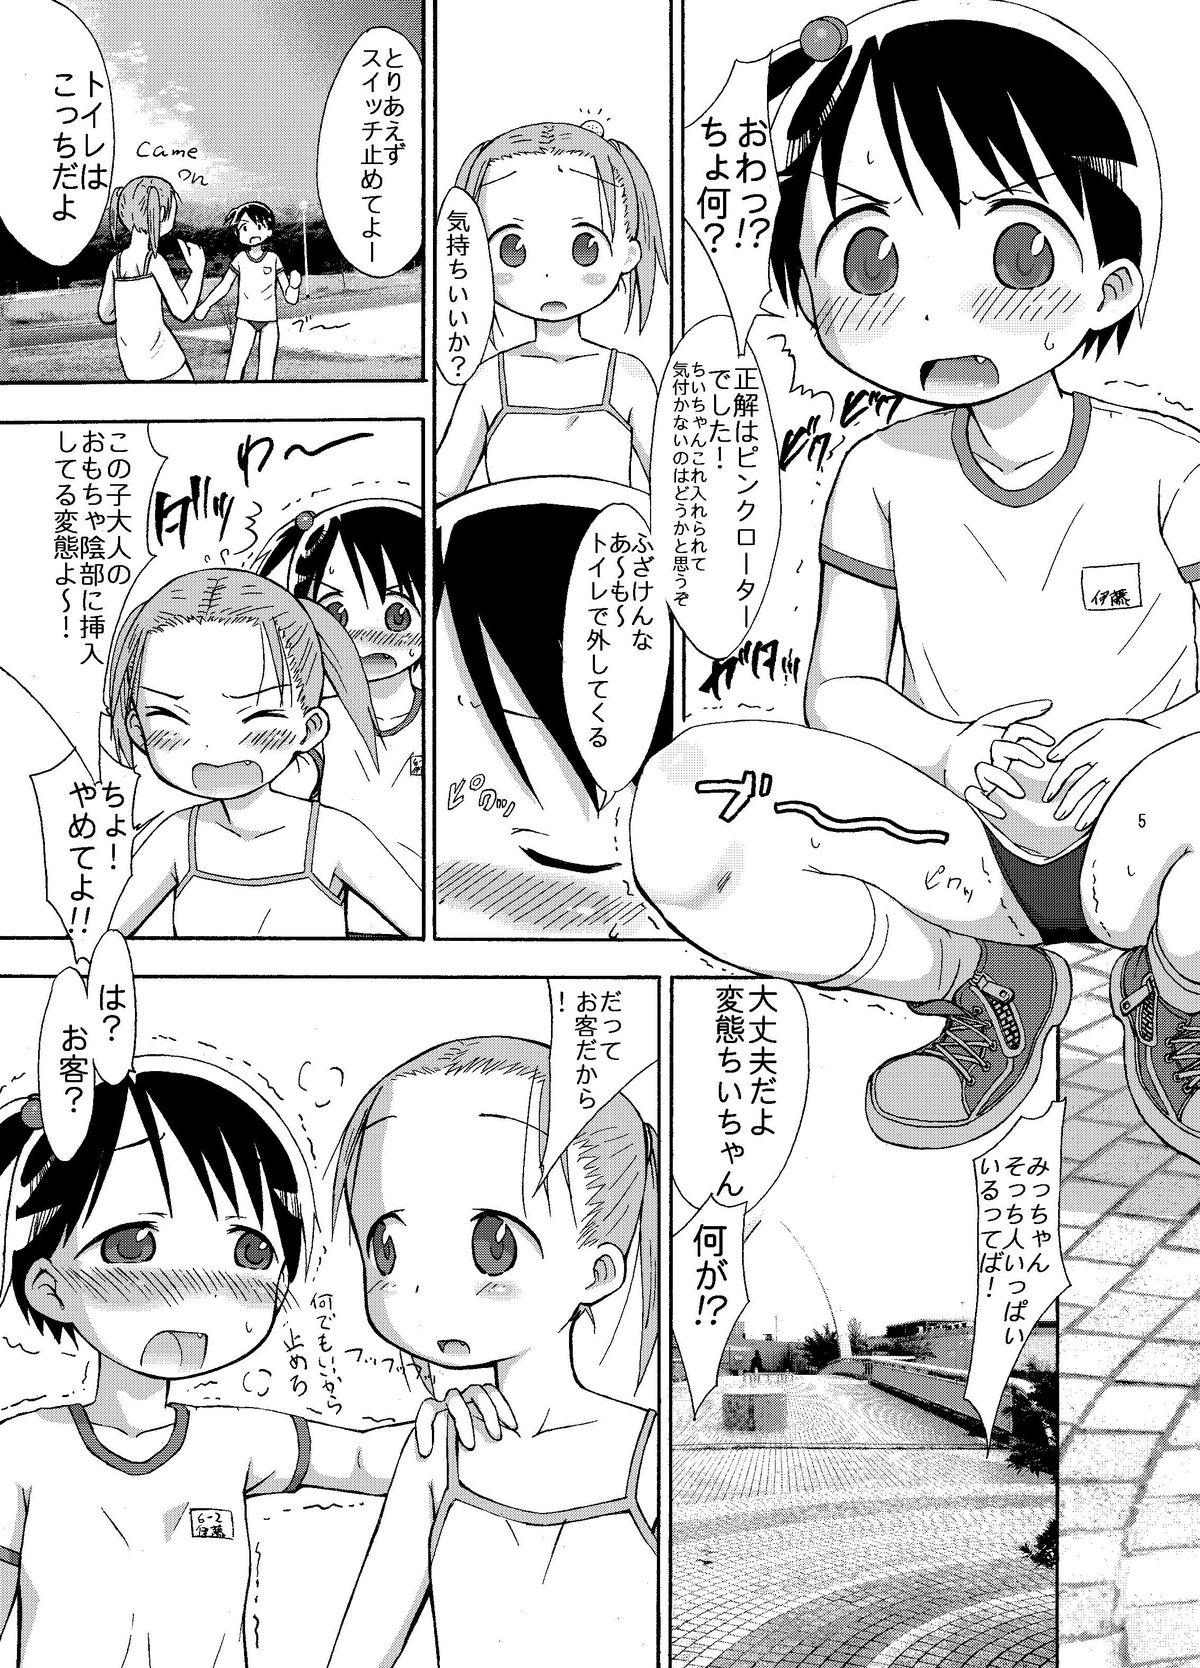 Tgirls mashimaro ism L - Ichigo mashimaro Moan - Page 5